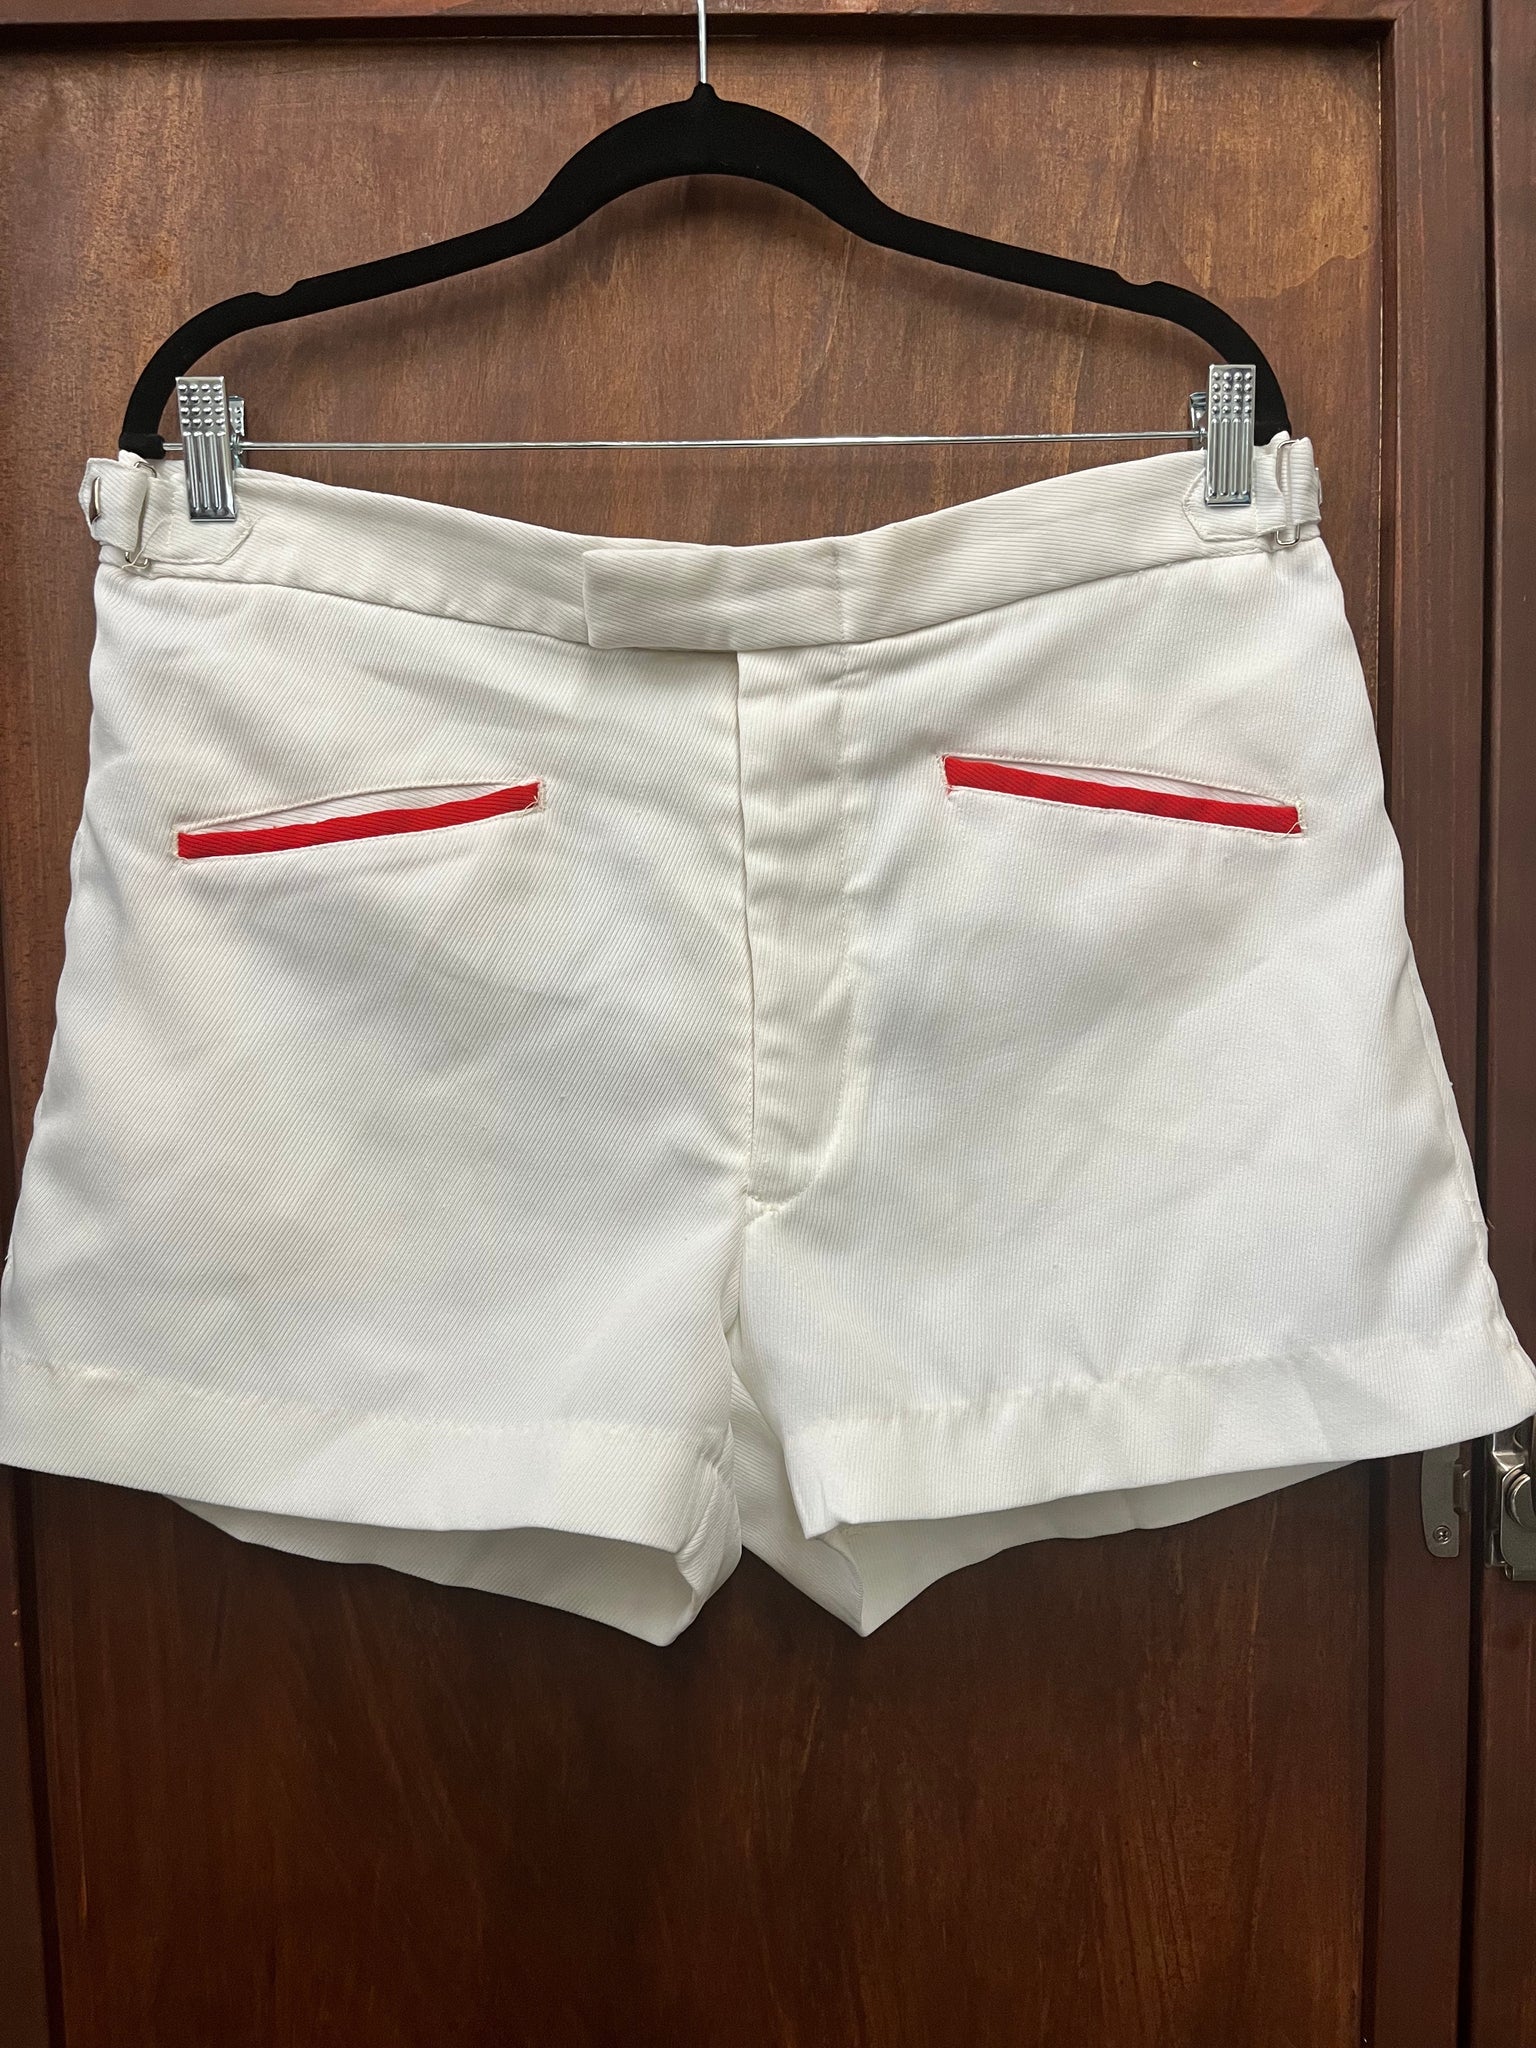 1960s MENS SHORTS- White tennis shorts w/red trim pockets